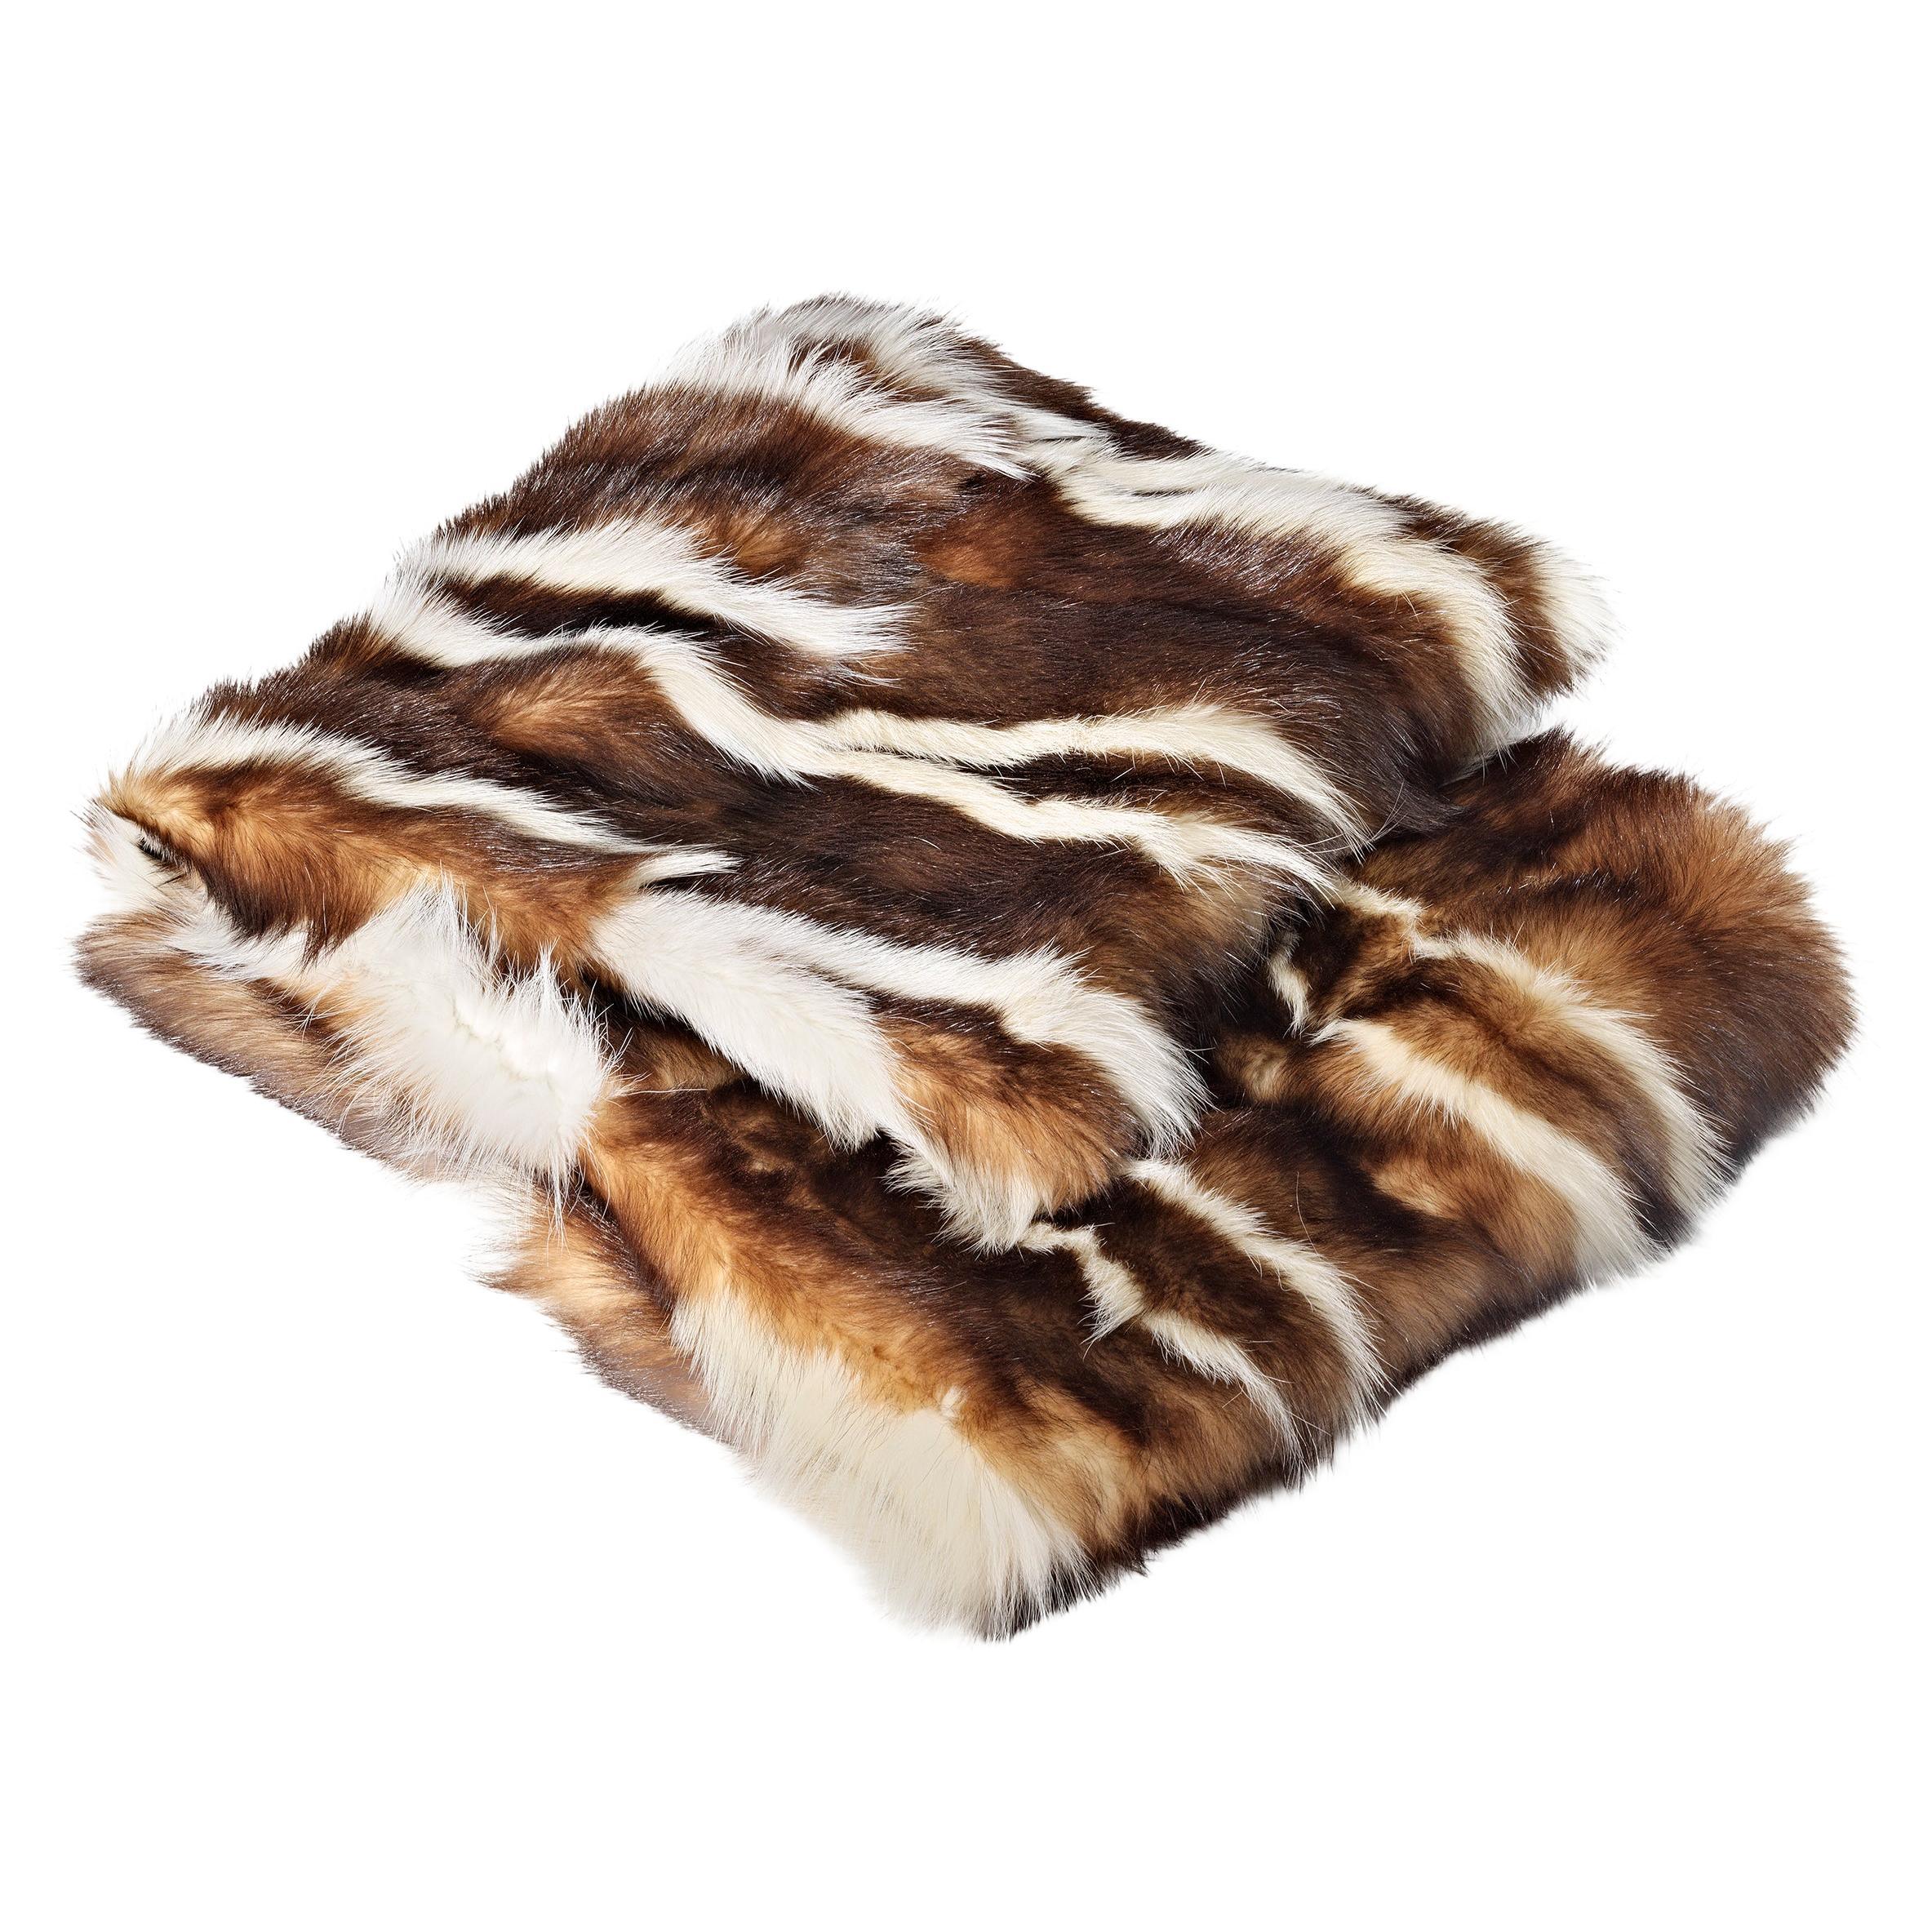 Skunk Fur Bed / Sofa Throw Blanket. Merino Wool Backing For Sale